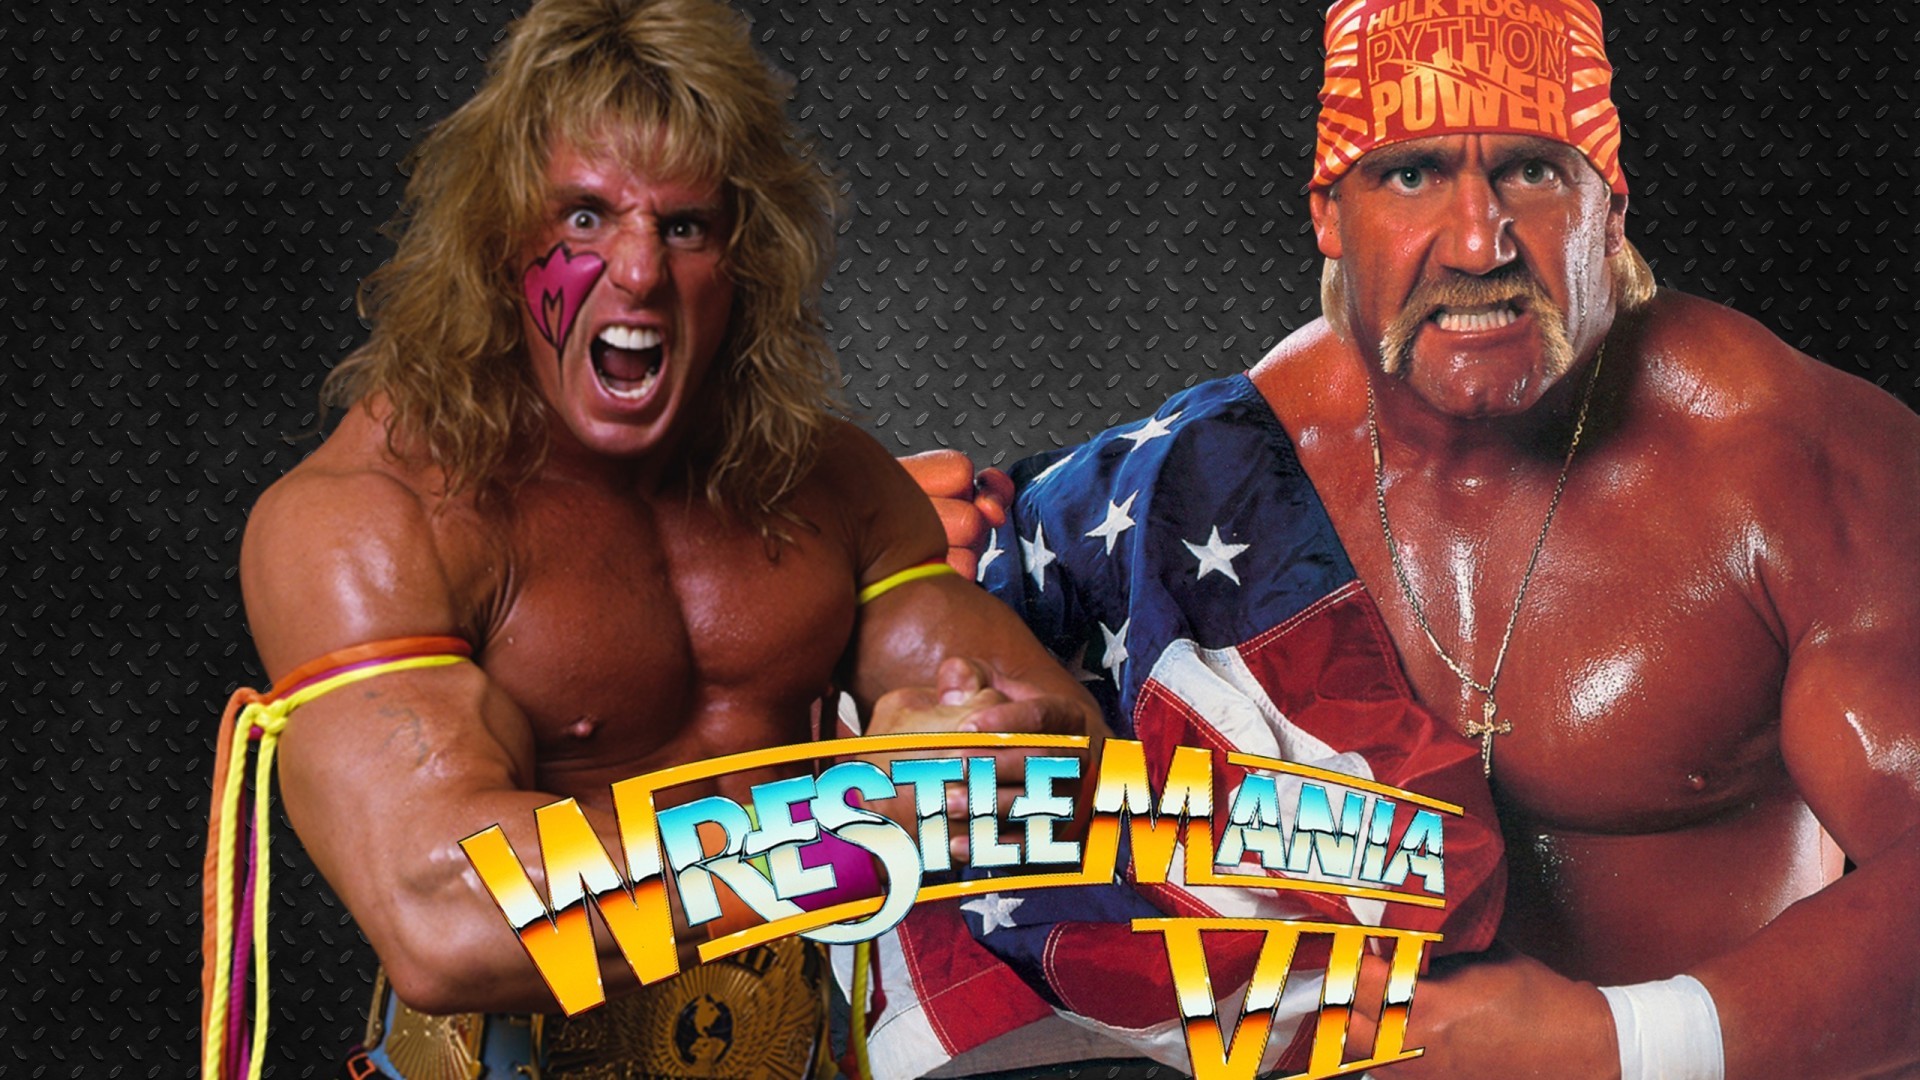 1920x1080 The Ultimate Warrior & Hulk Hogan WrestleMania 7 HD Wallpaper